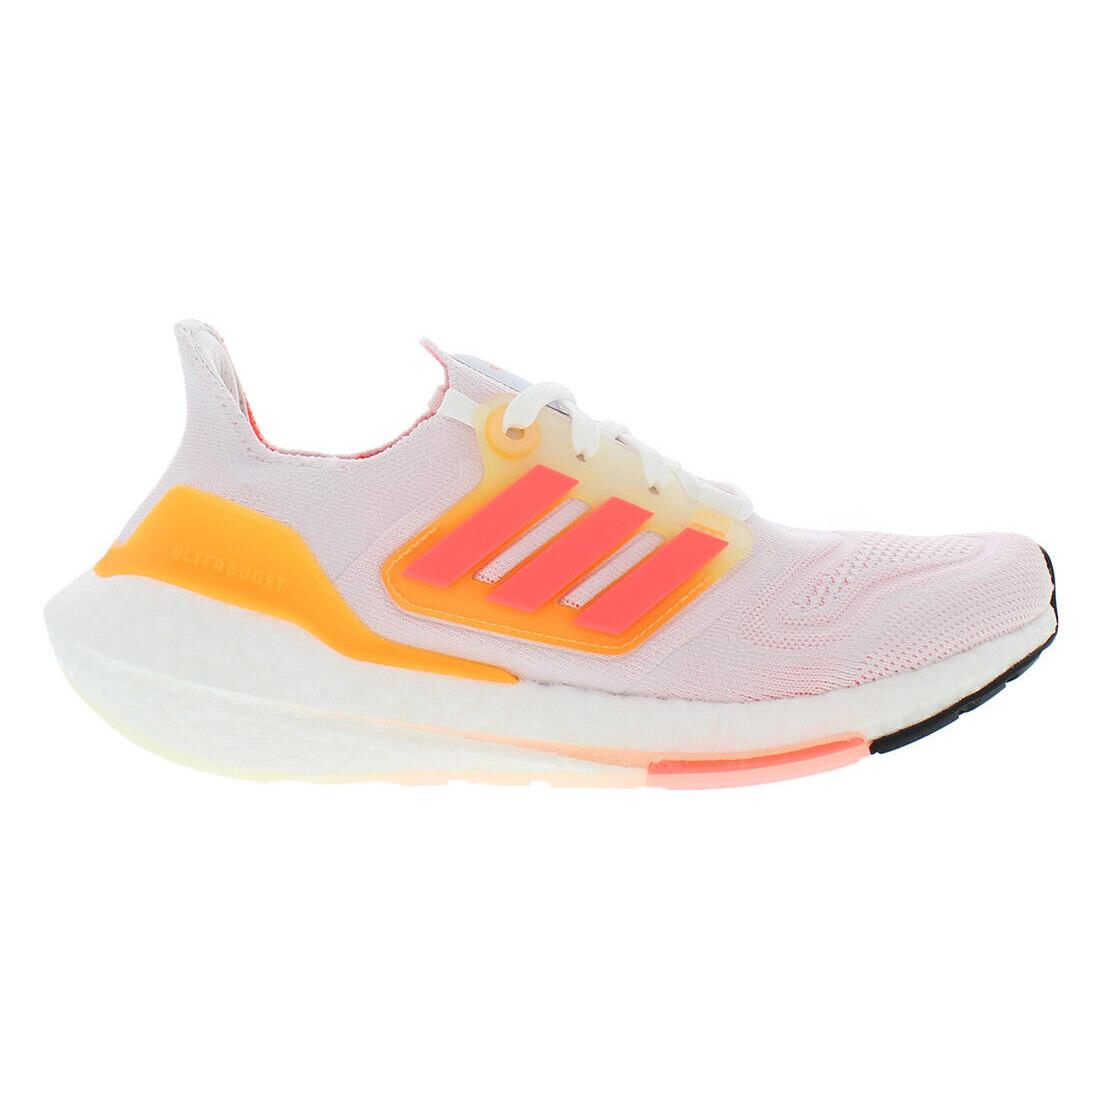 Adidas Ultraboost 22 Womens Shoes - White/Orange/Red, Main: White